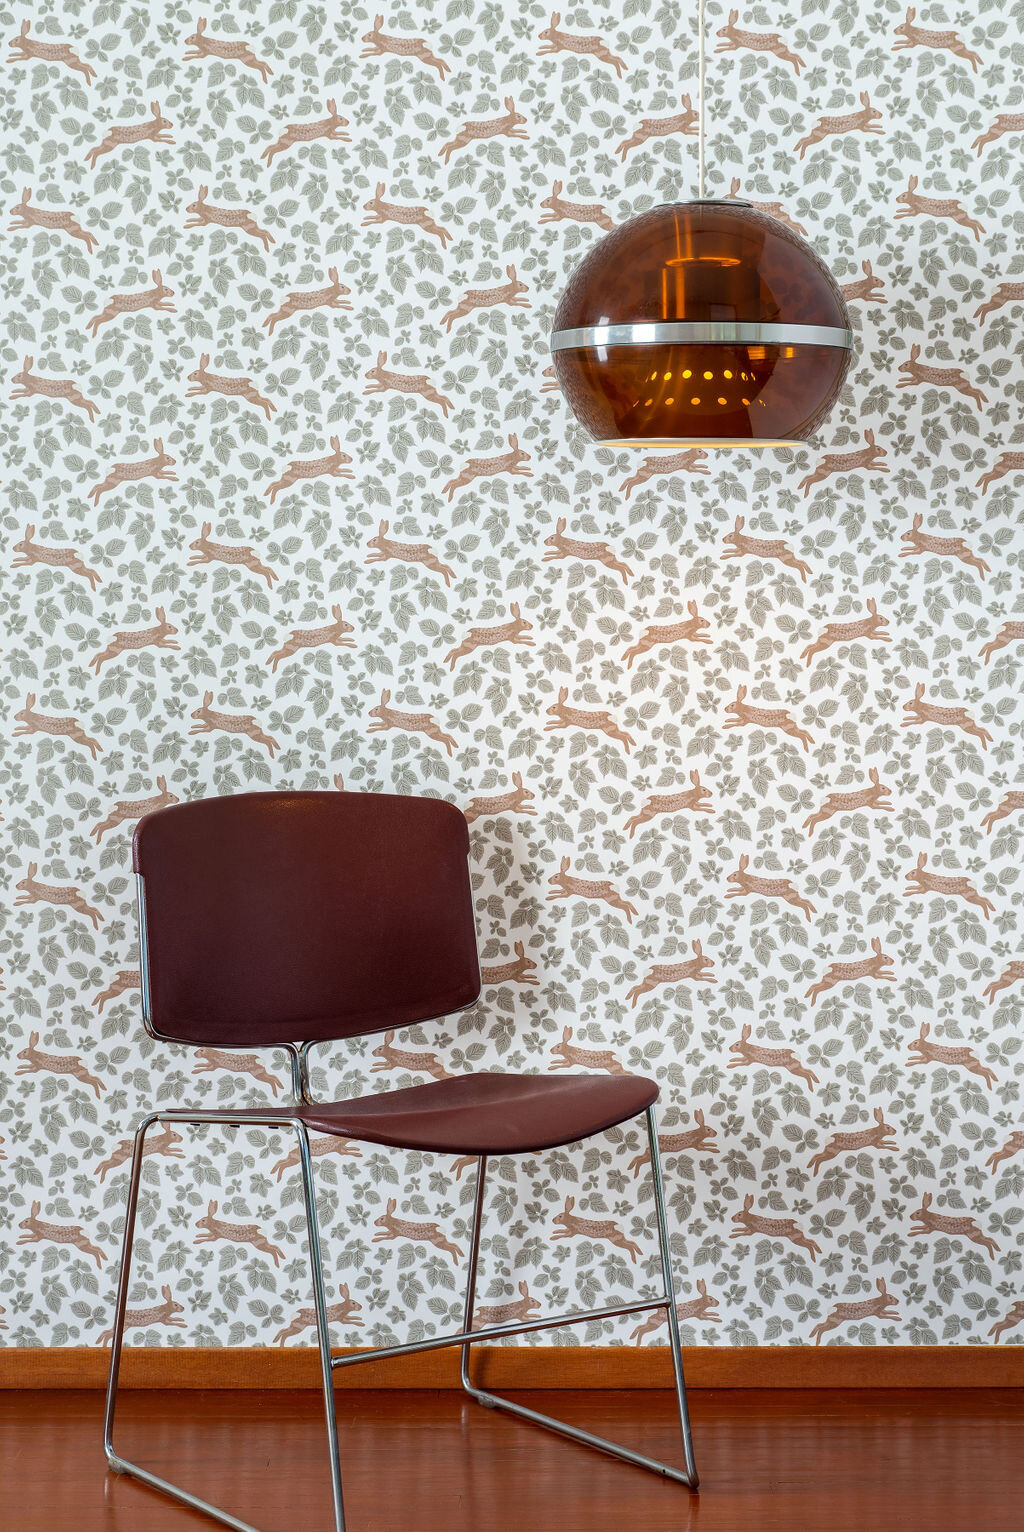 Kate Golding Rabbit wallpaper // Modern wallcoverings and interior decor.